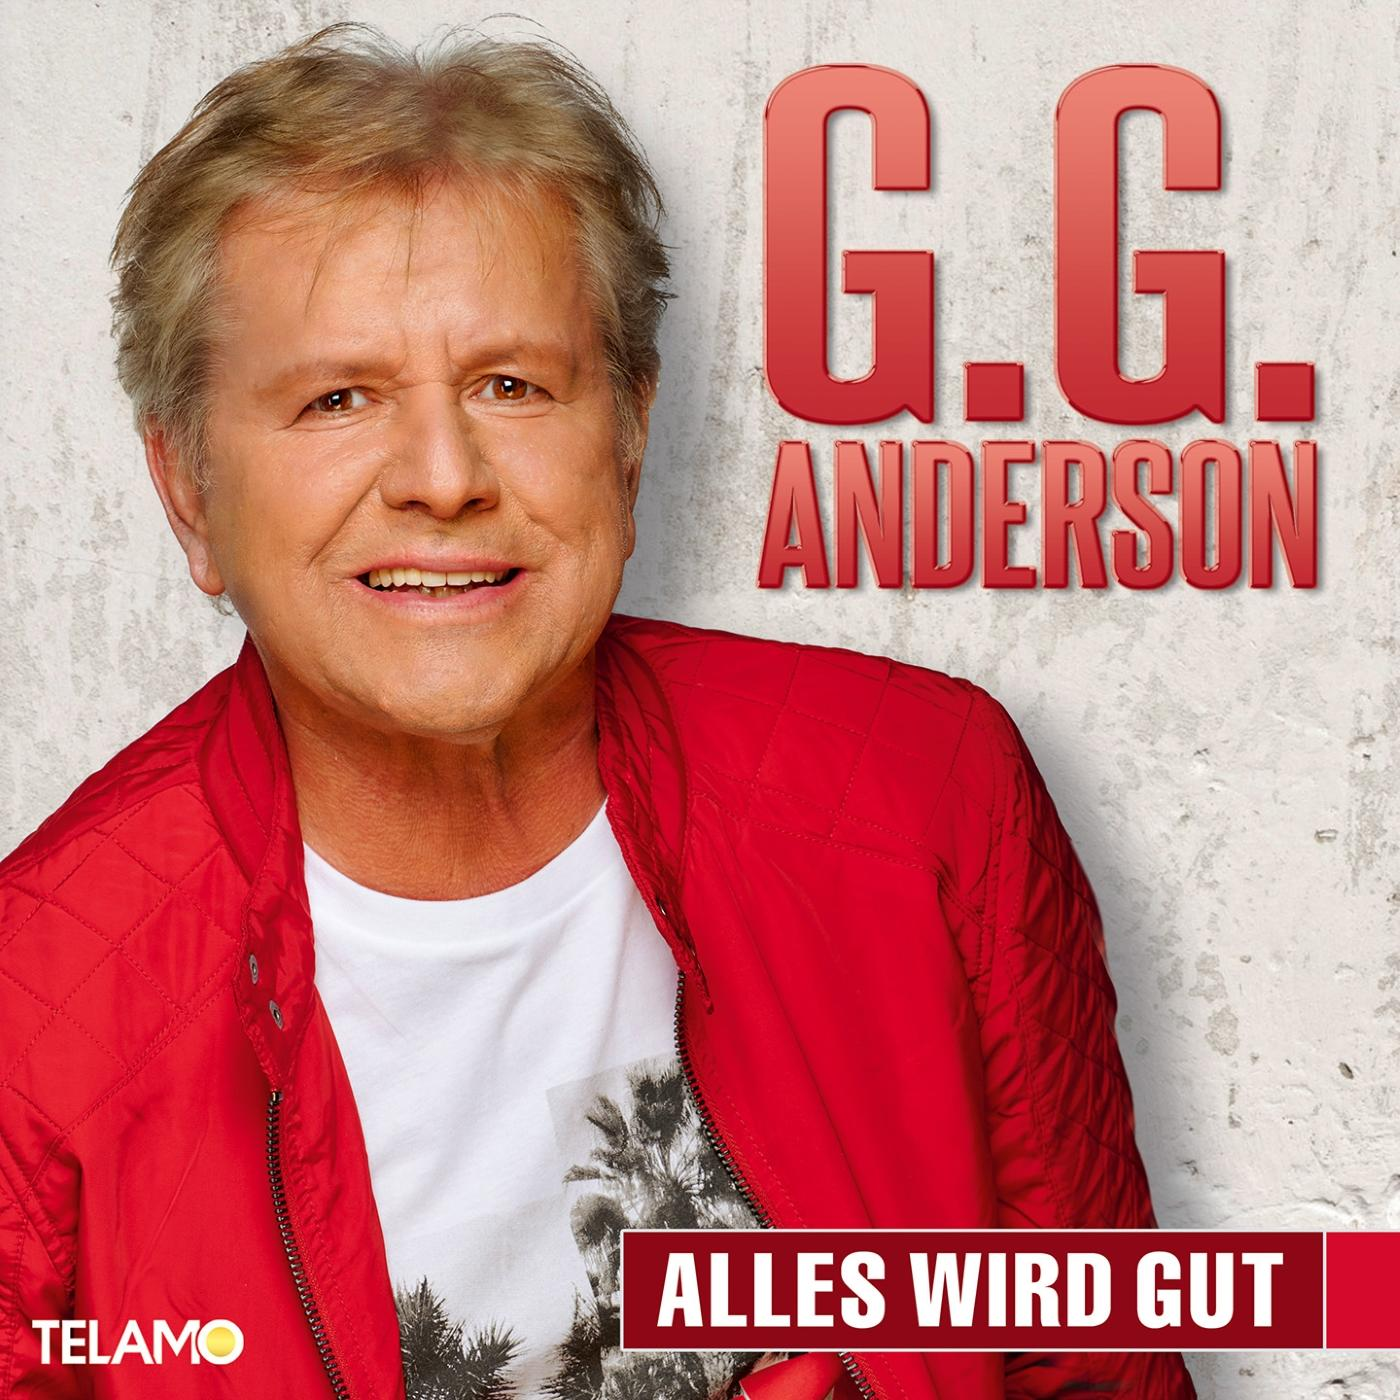 Alles - (CD) - Anderson wird G.G. gut